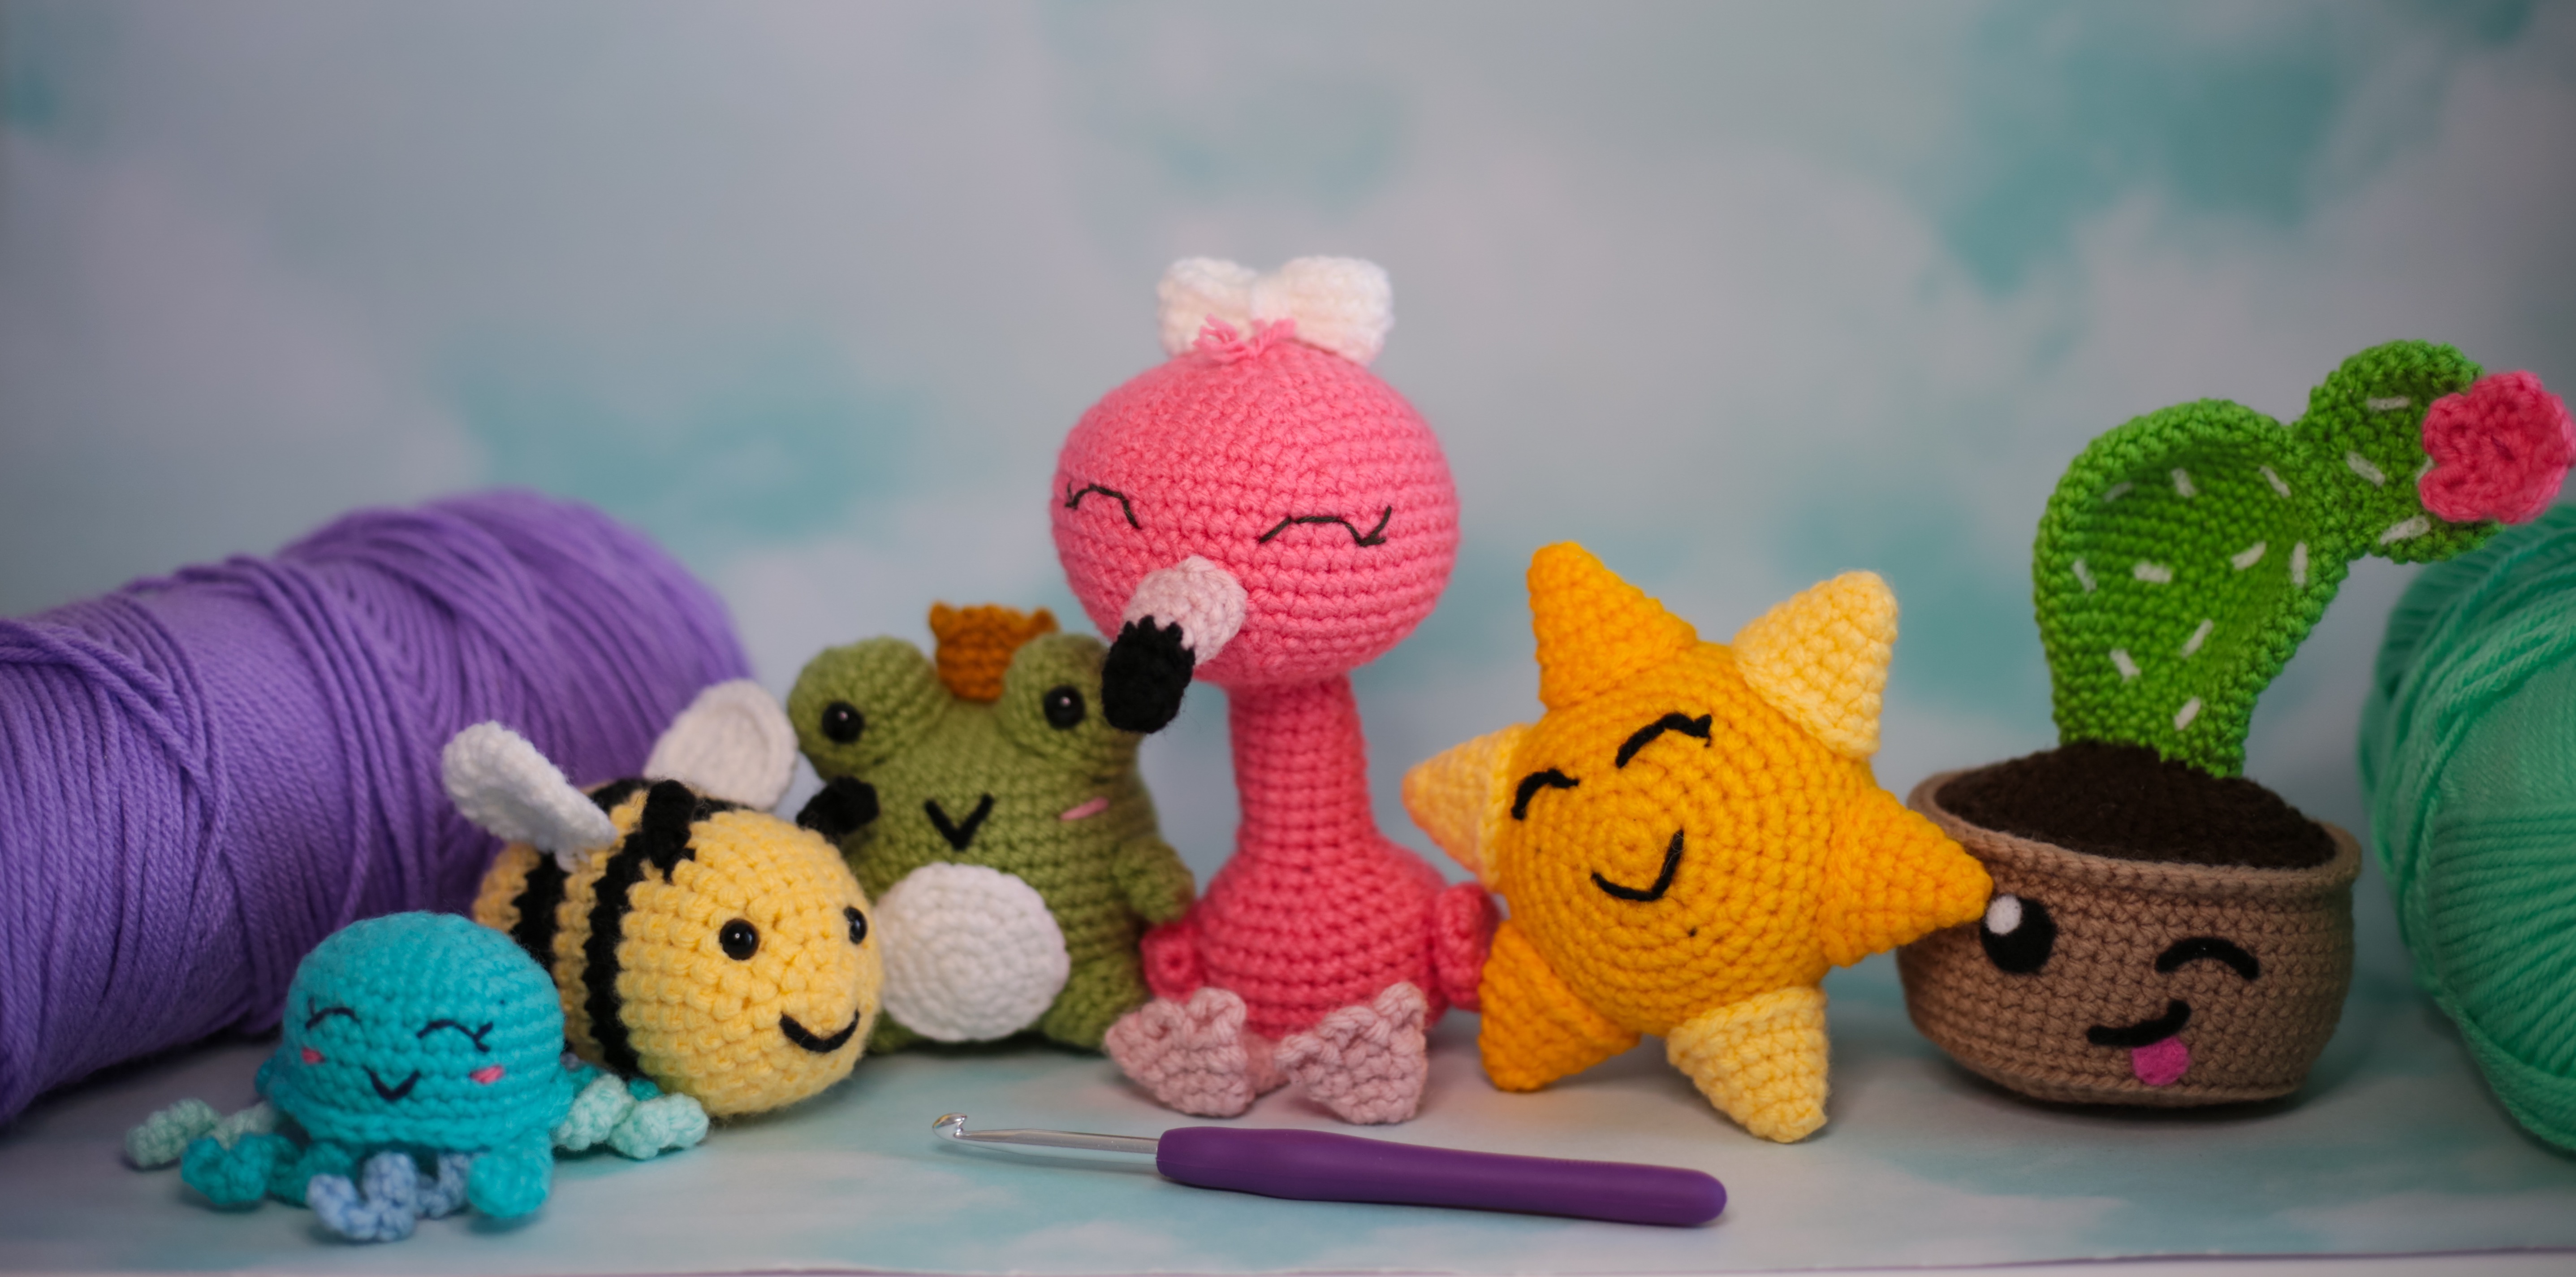 Learn How to Crochet Amigurumi for Beginners